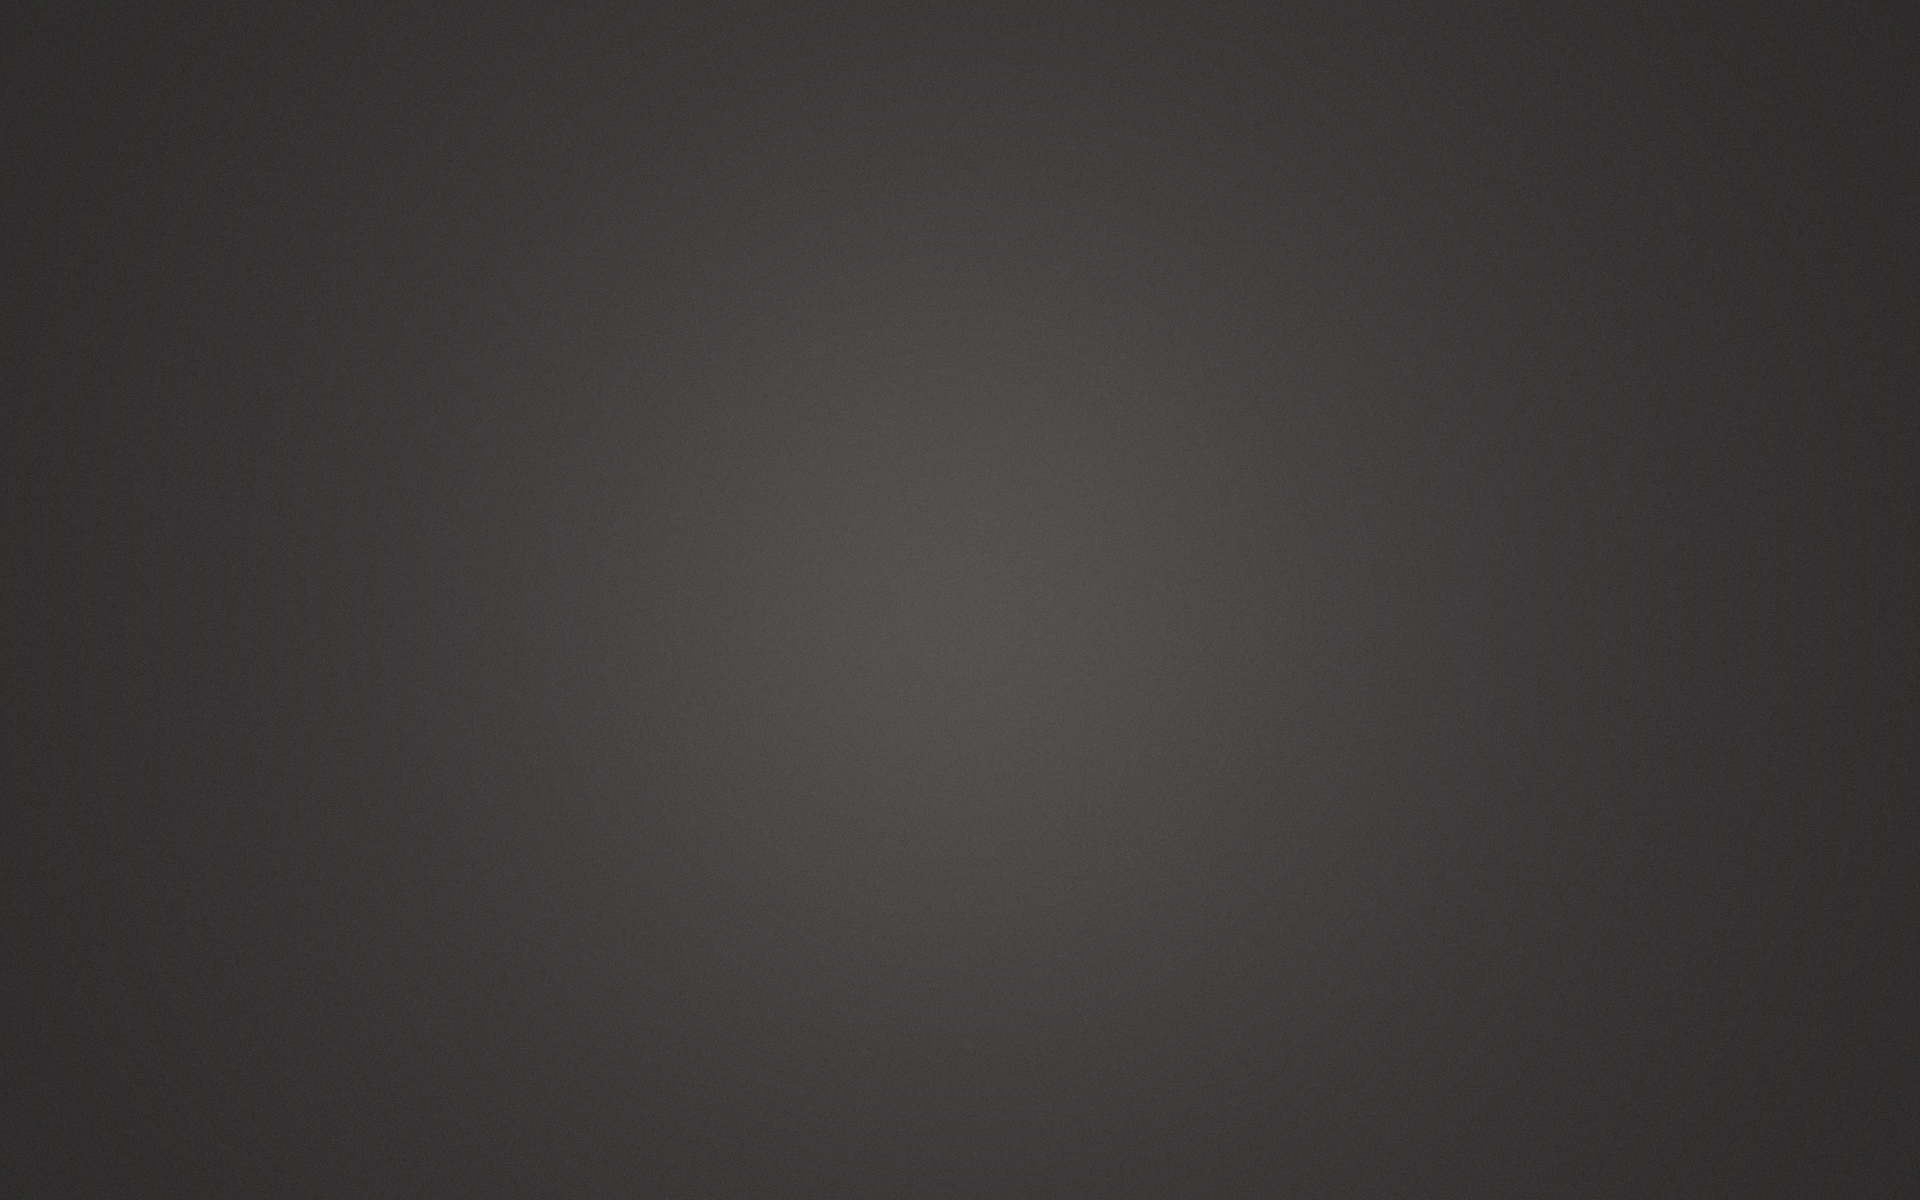 Granulation Background In Grey By Java User On DeviantArt